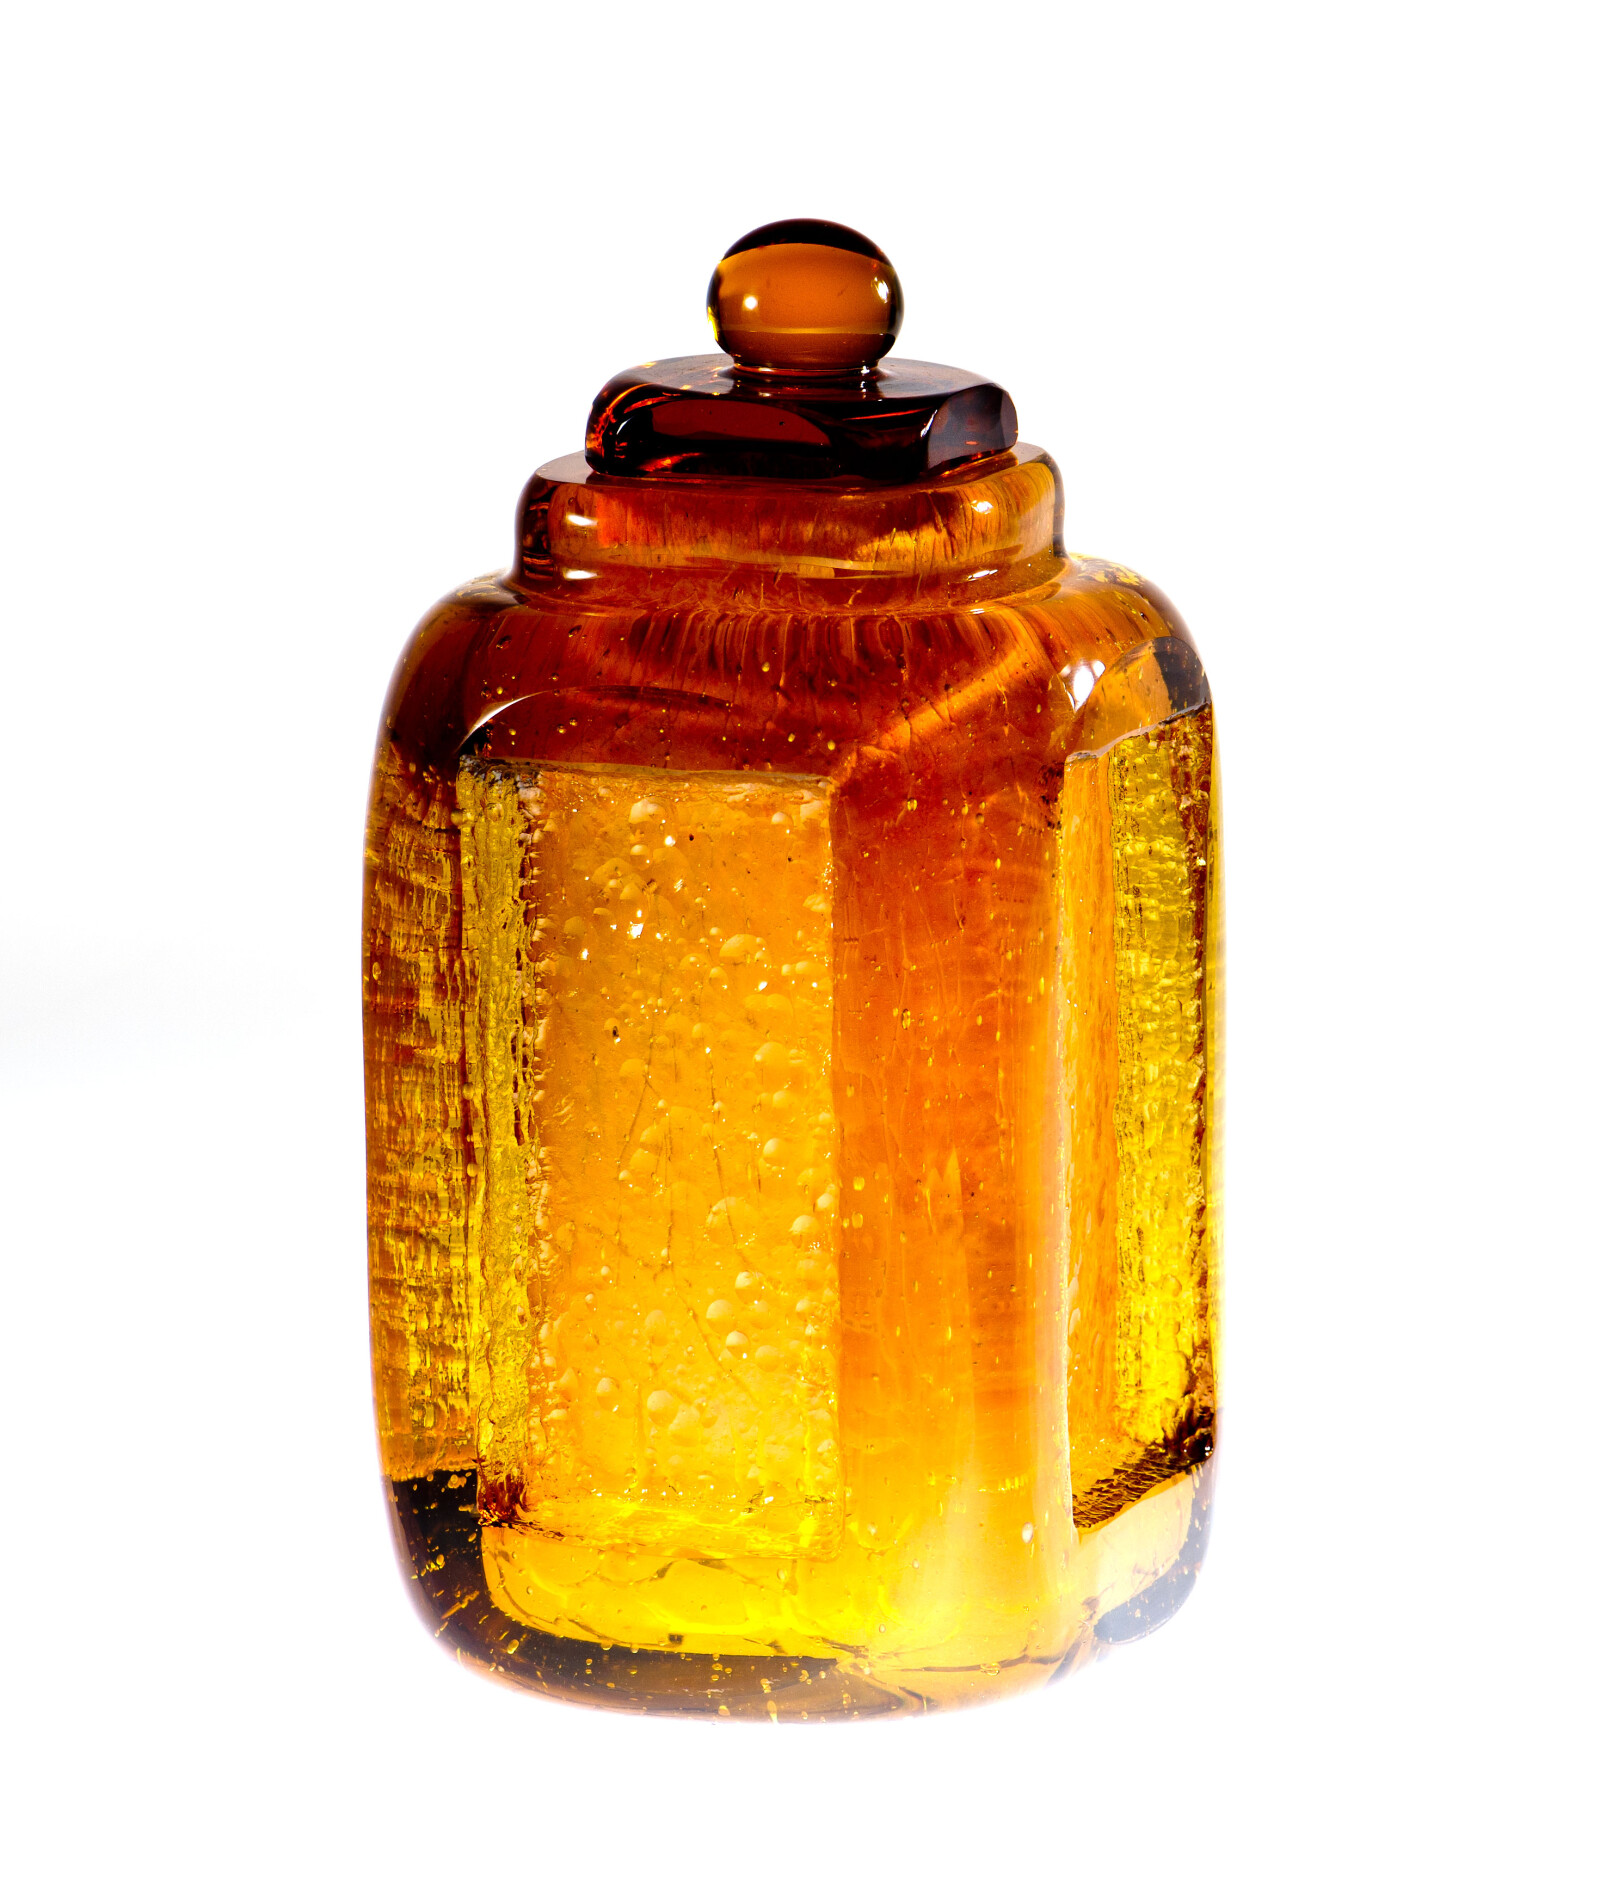 Bottle and stopper, 1929, acid-etche, crackled and cased glass. (DA008205_03)